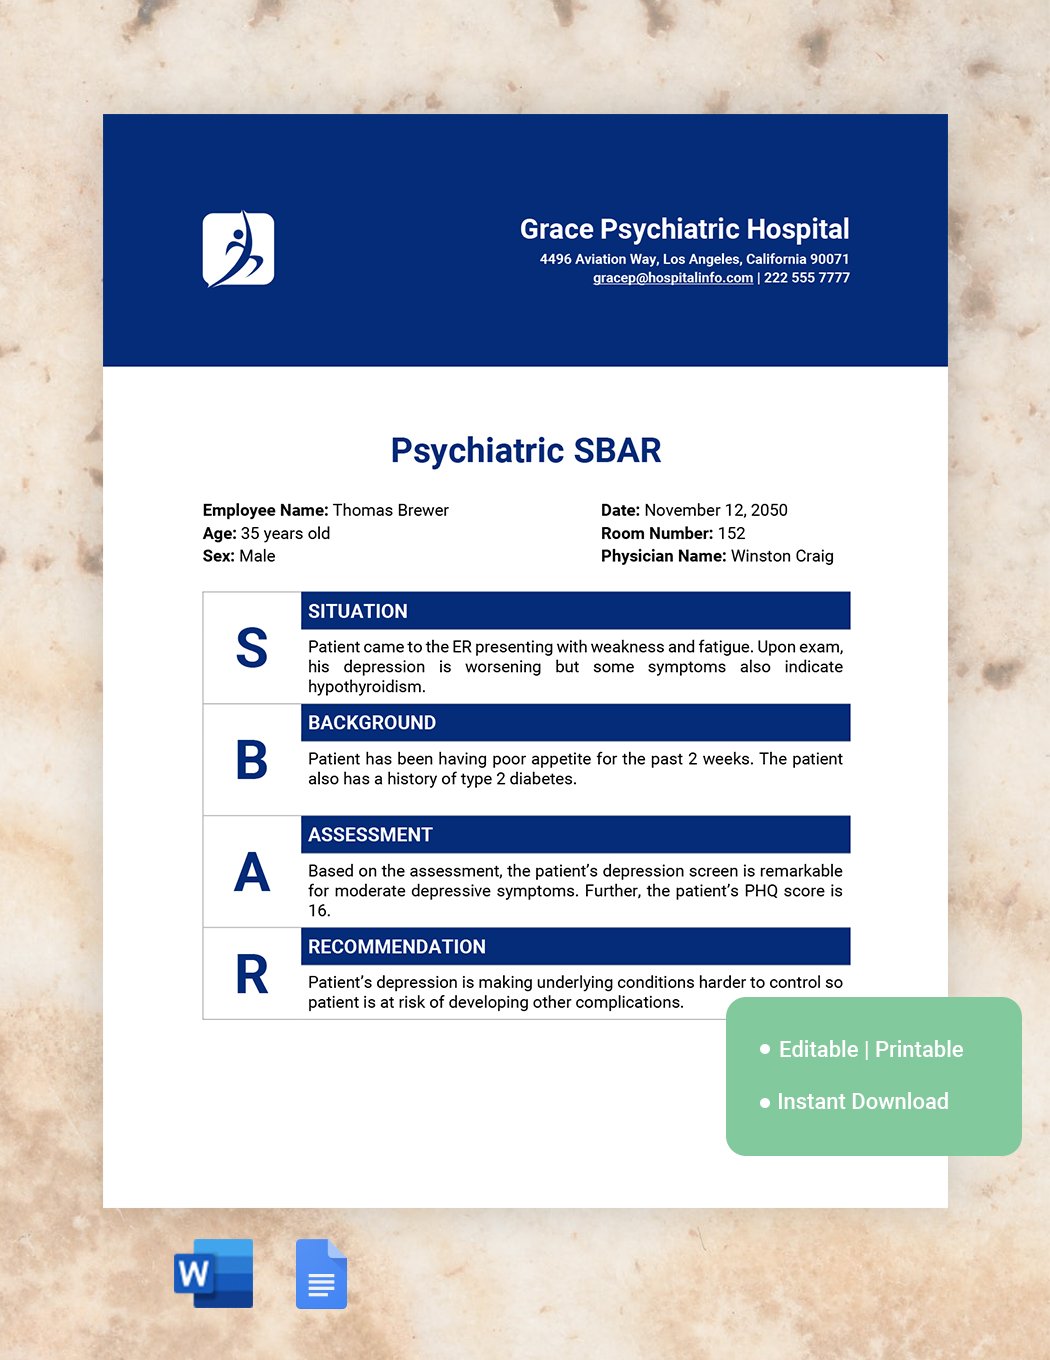 Psychiatric SBAR Template in Word, Google Docs